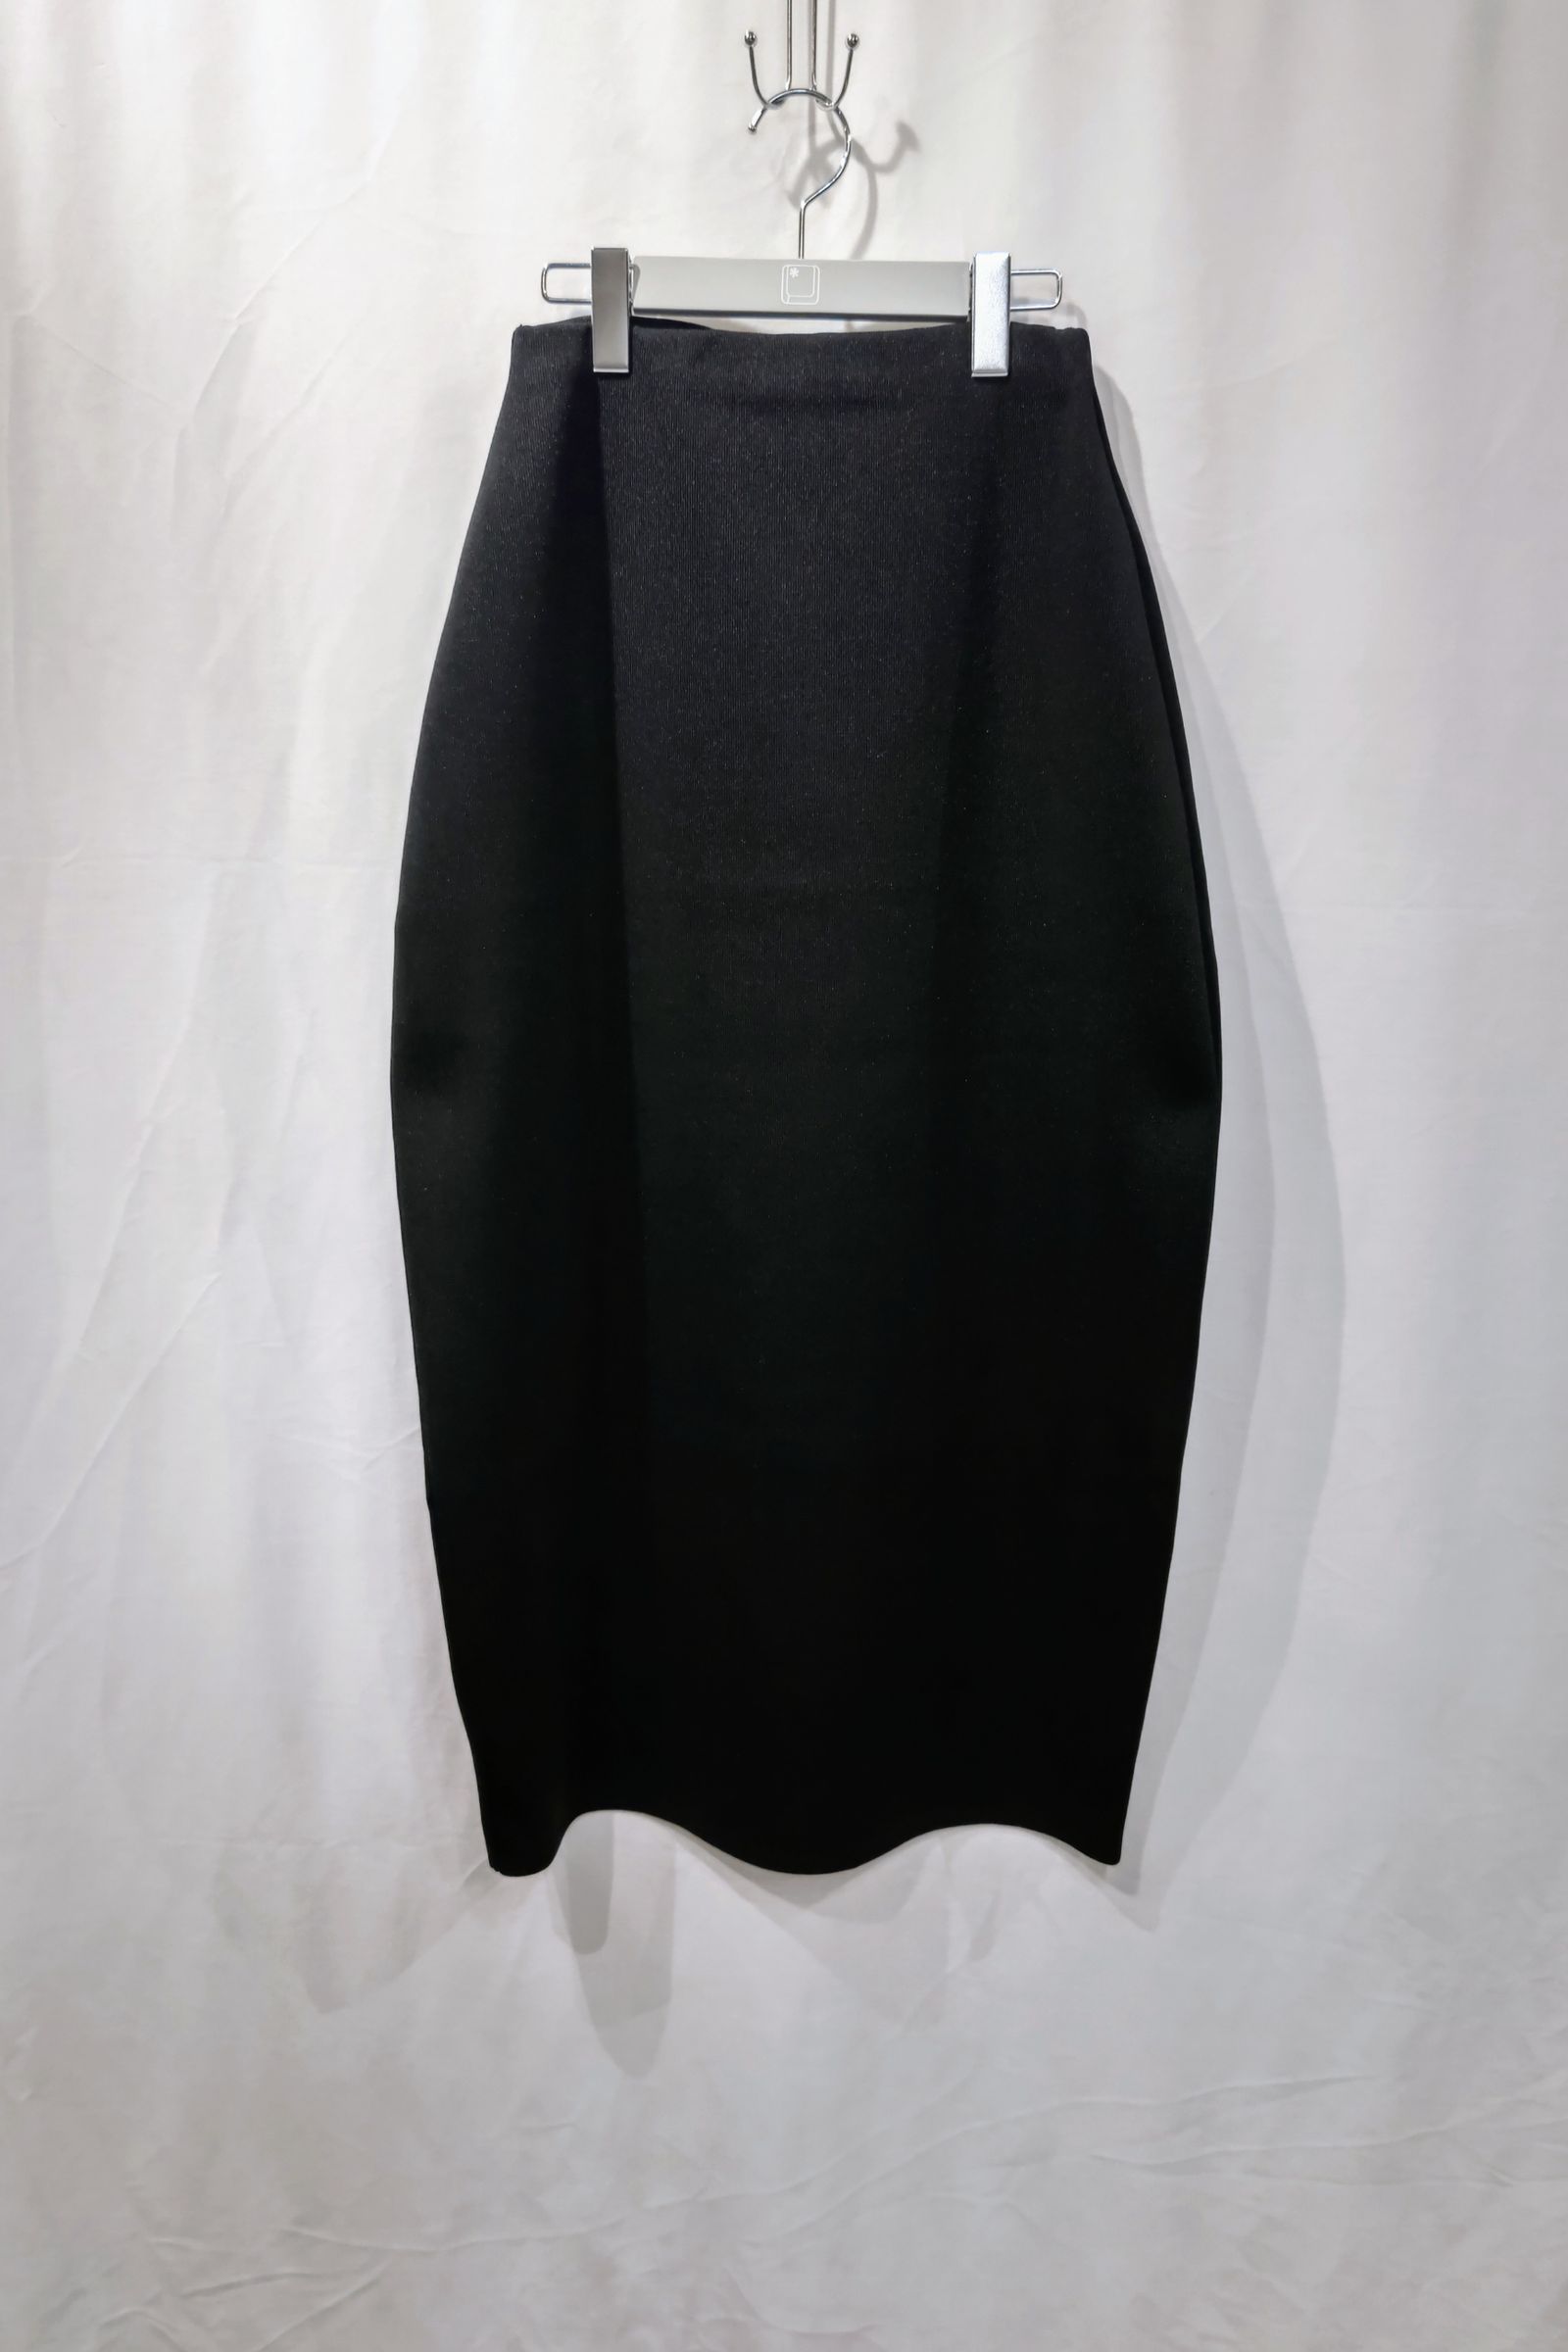 IIROT - air knit skirt -black- 23ss | asterisk